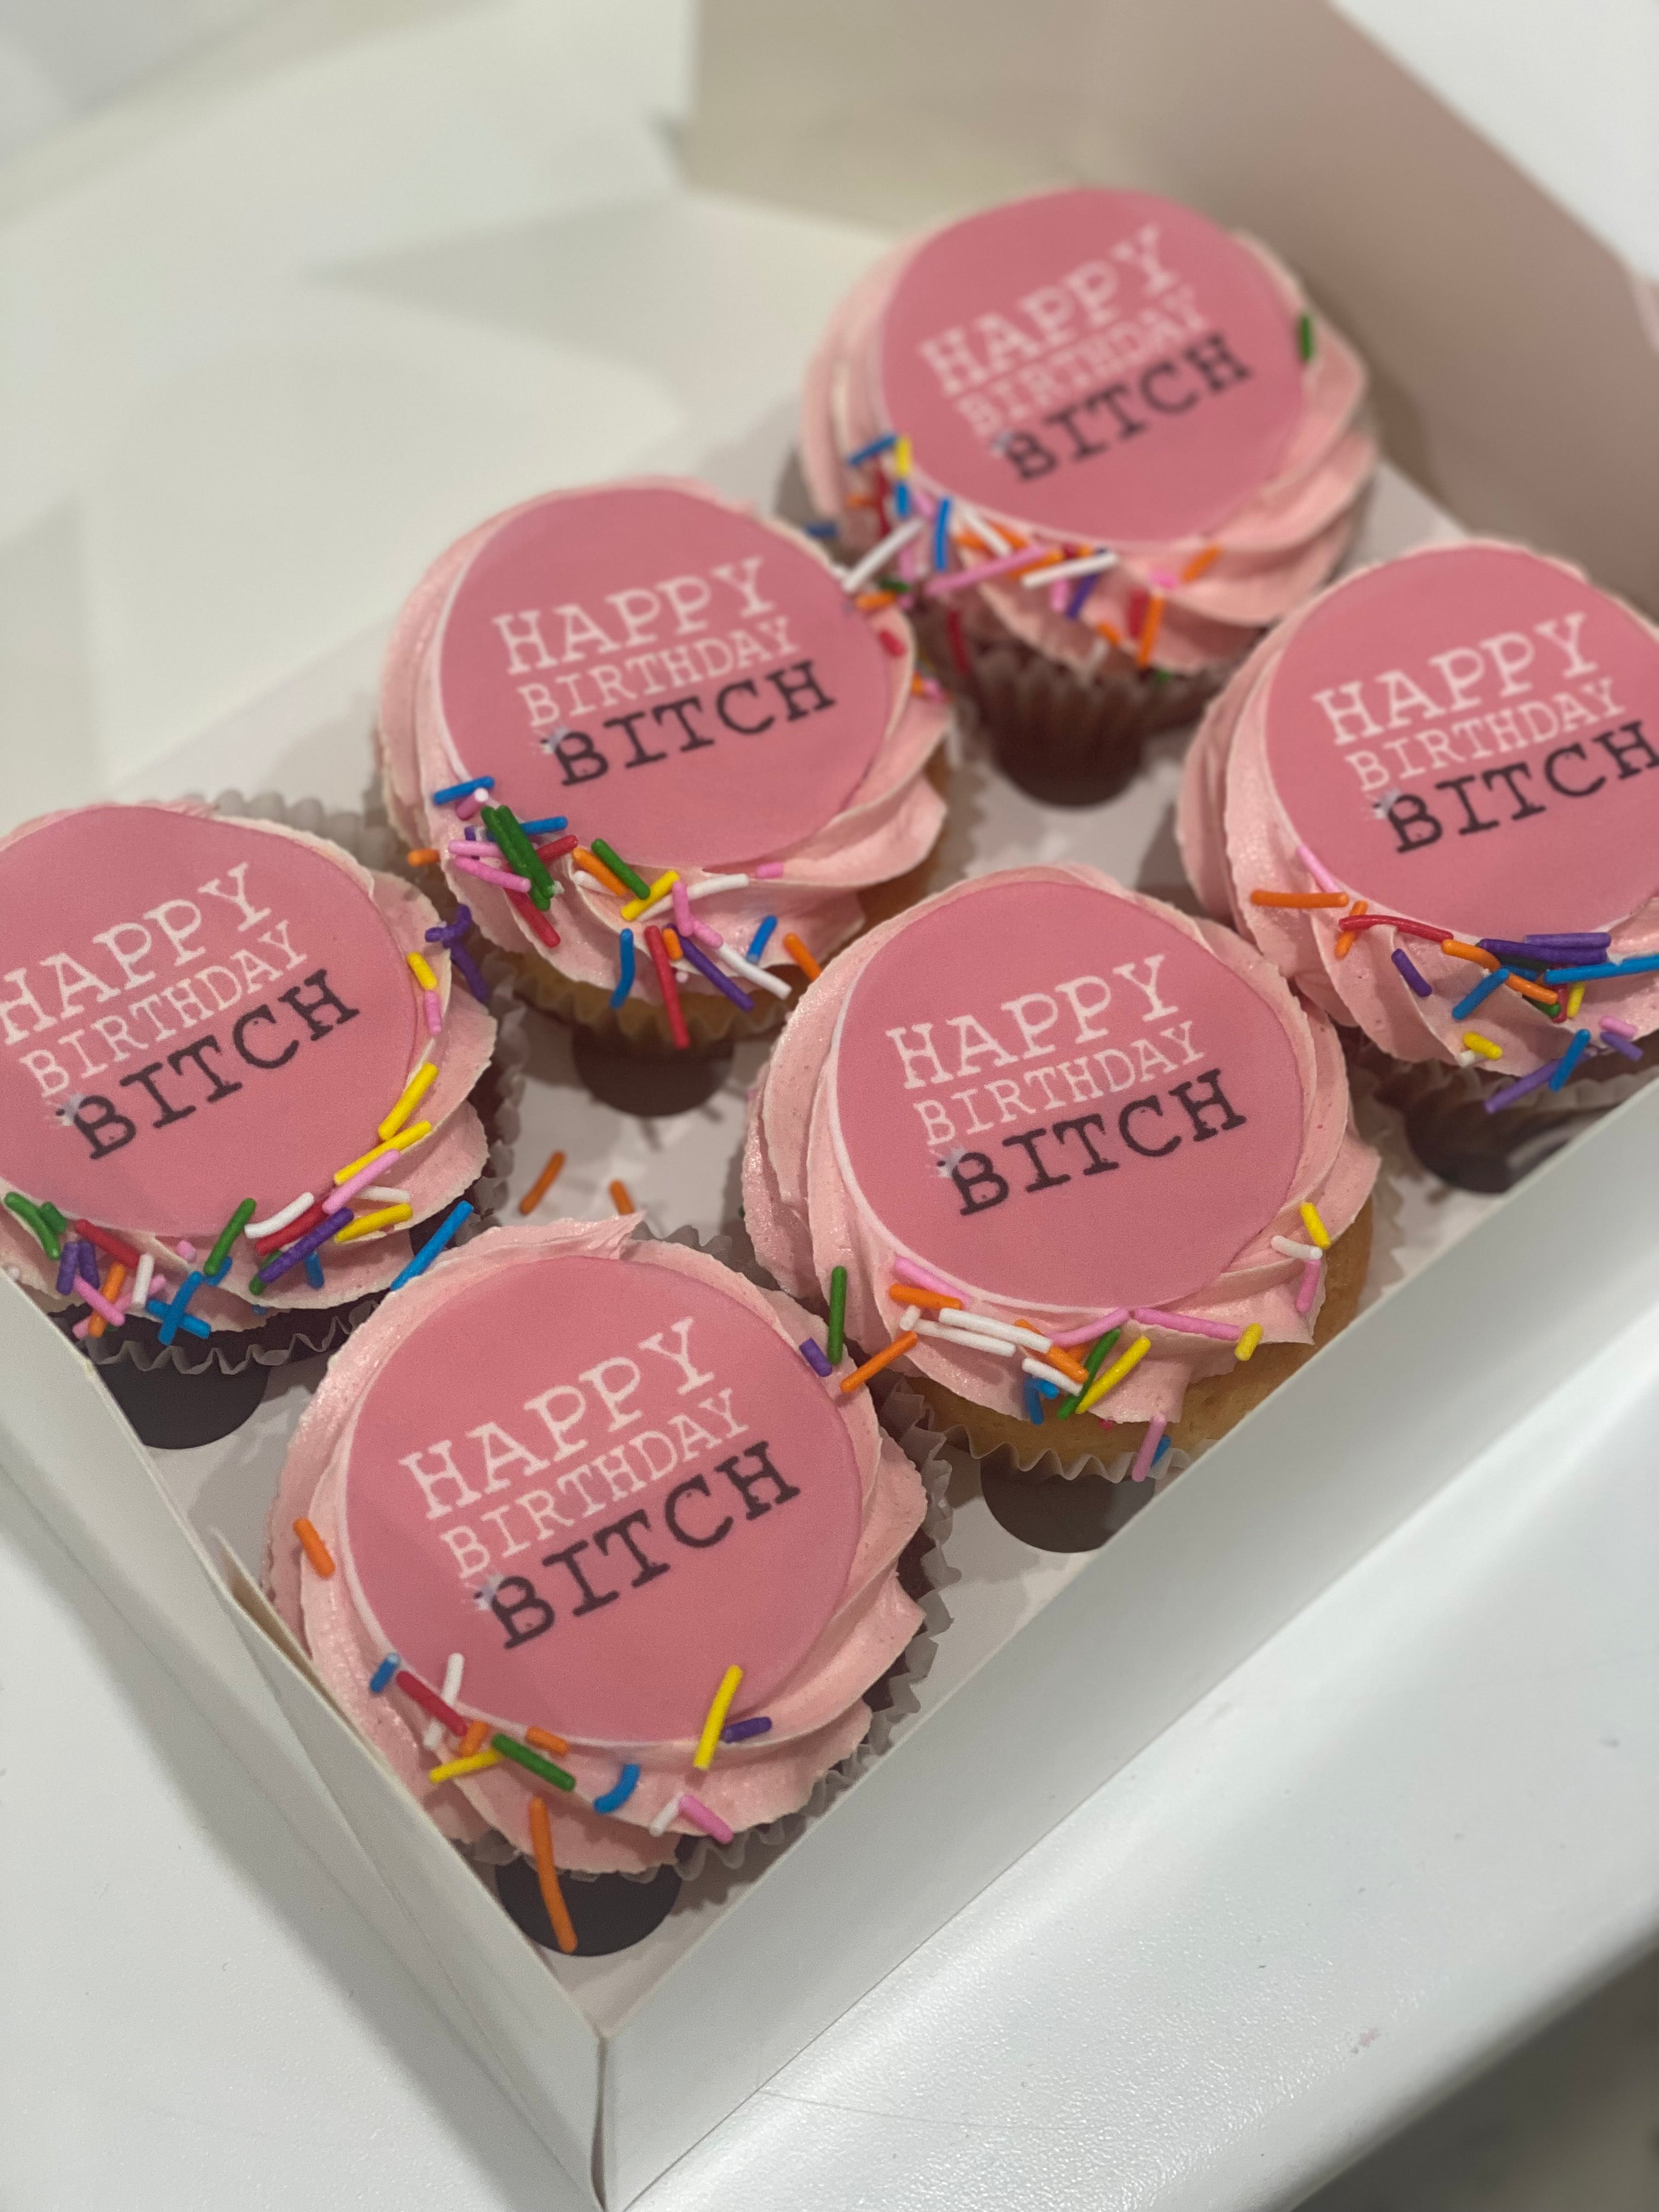 HBD BITCH - 12 cupcakes